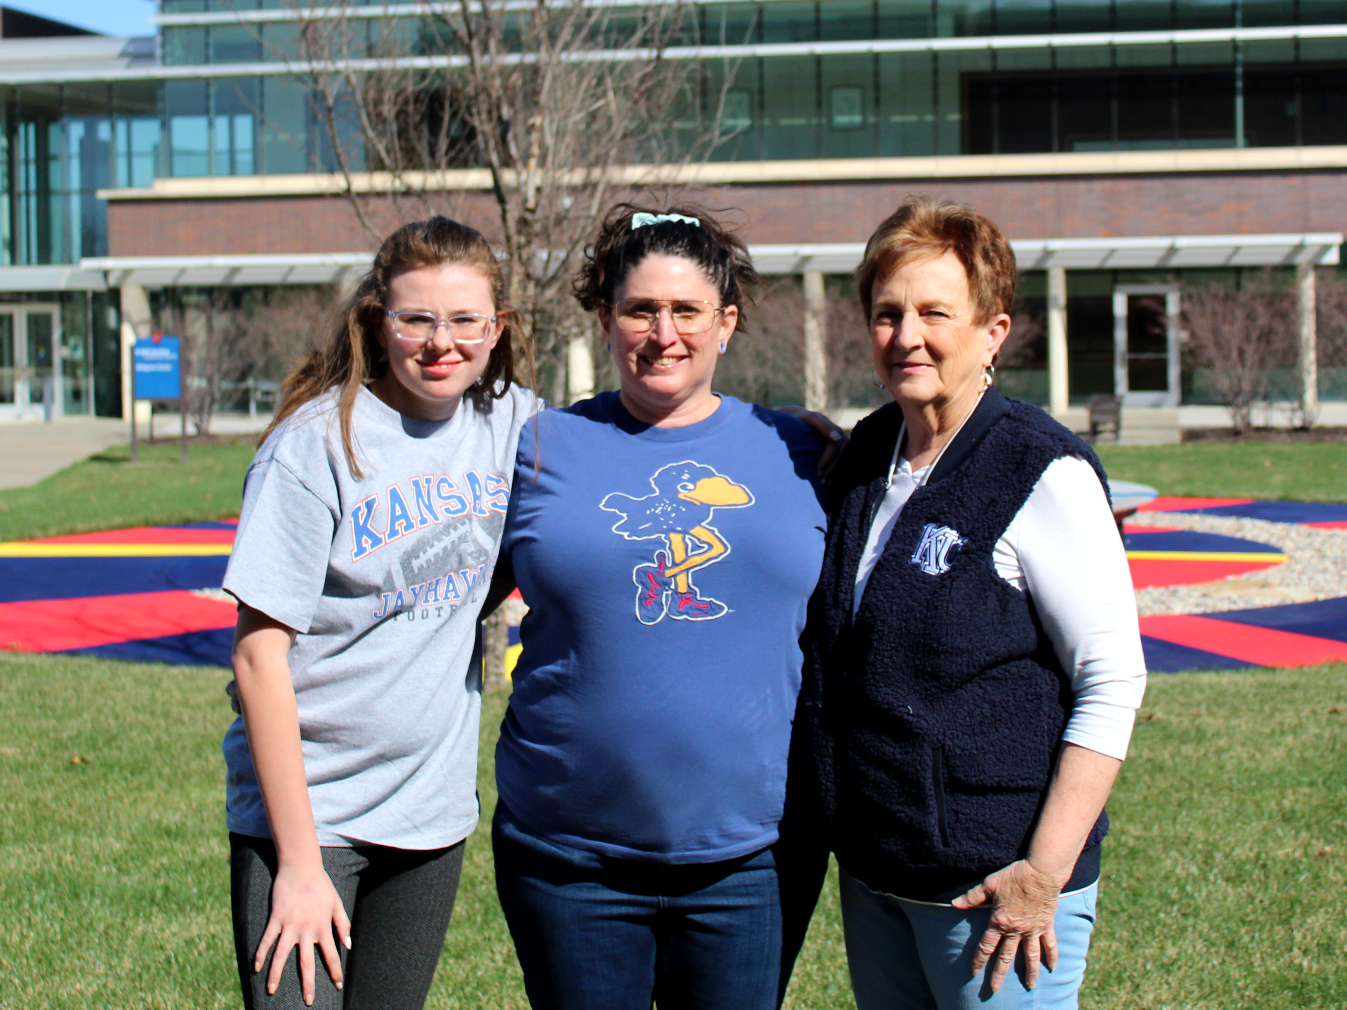 Suzie Zell (center) poses at the KU Edwards Campus 